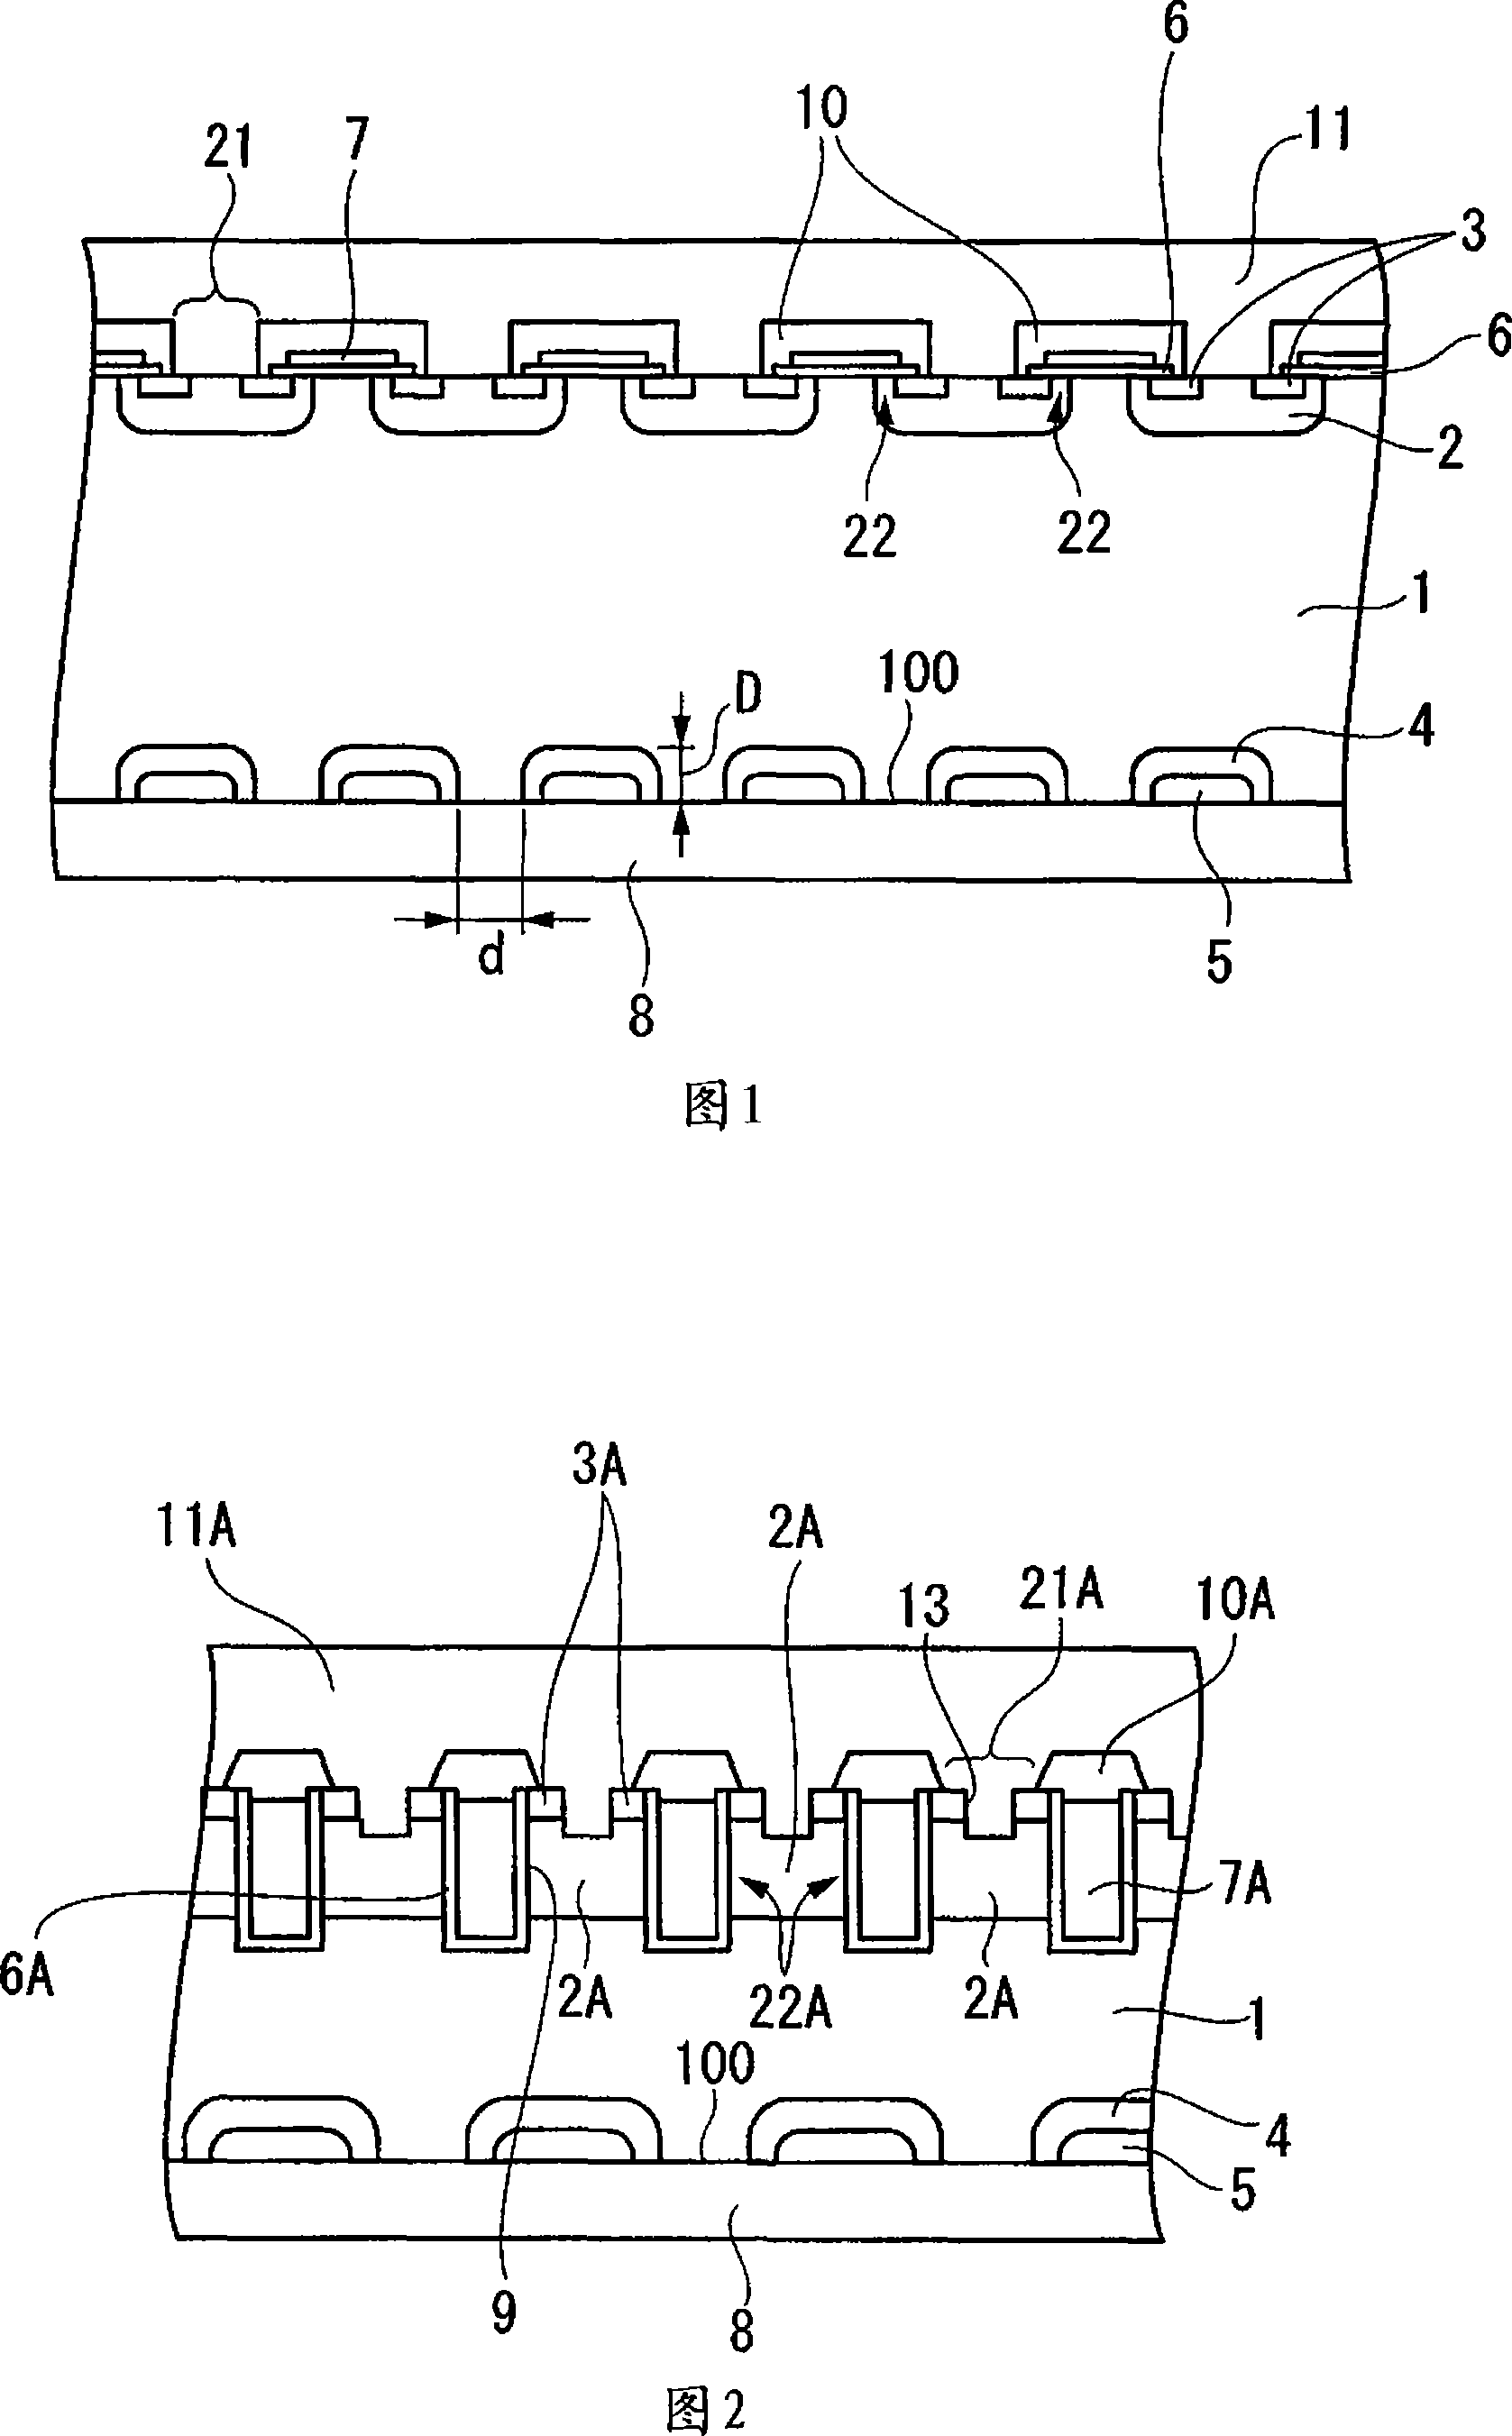 Isolated gate type bipolar transistor